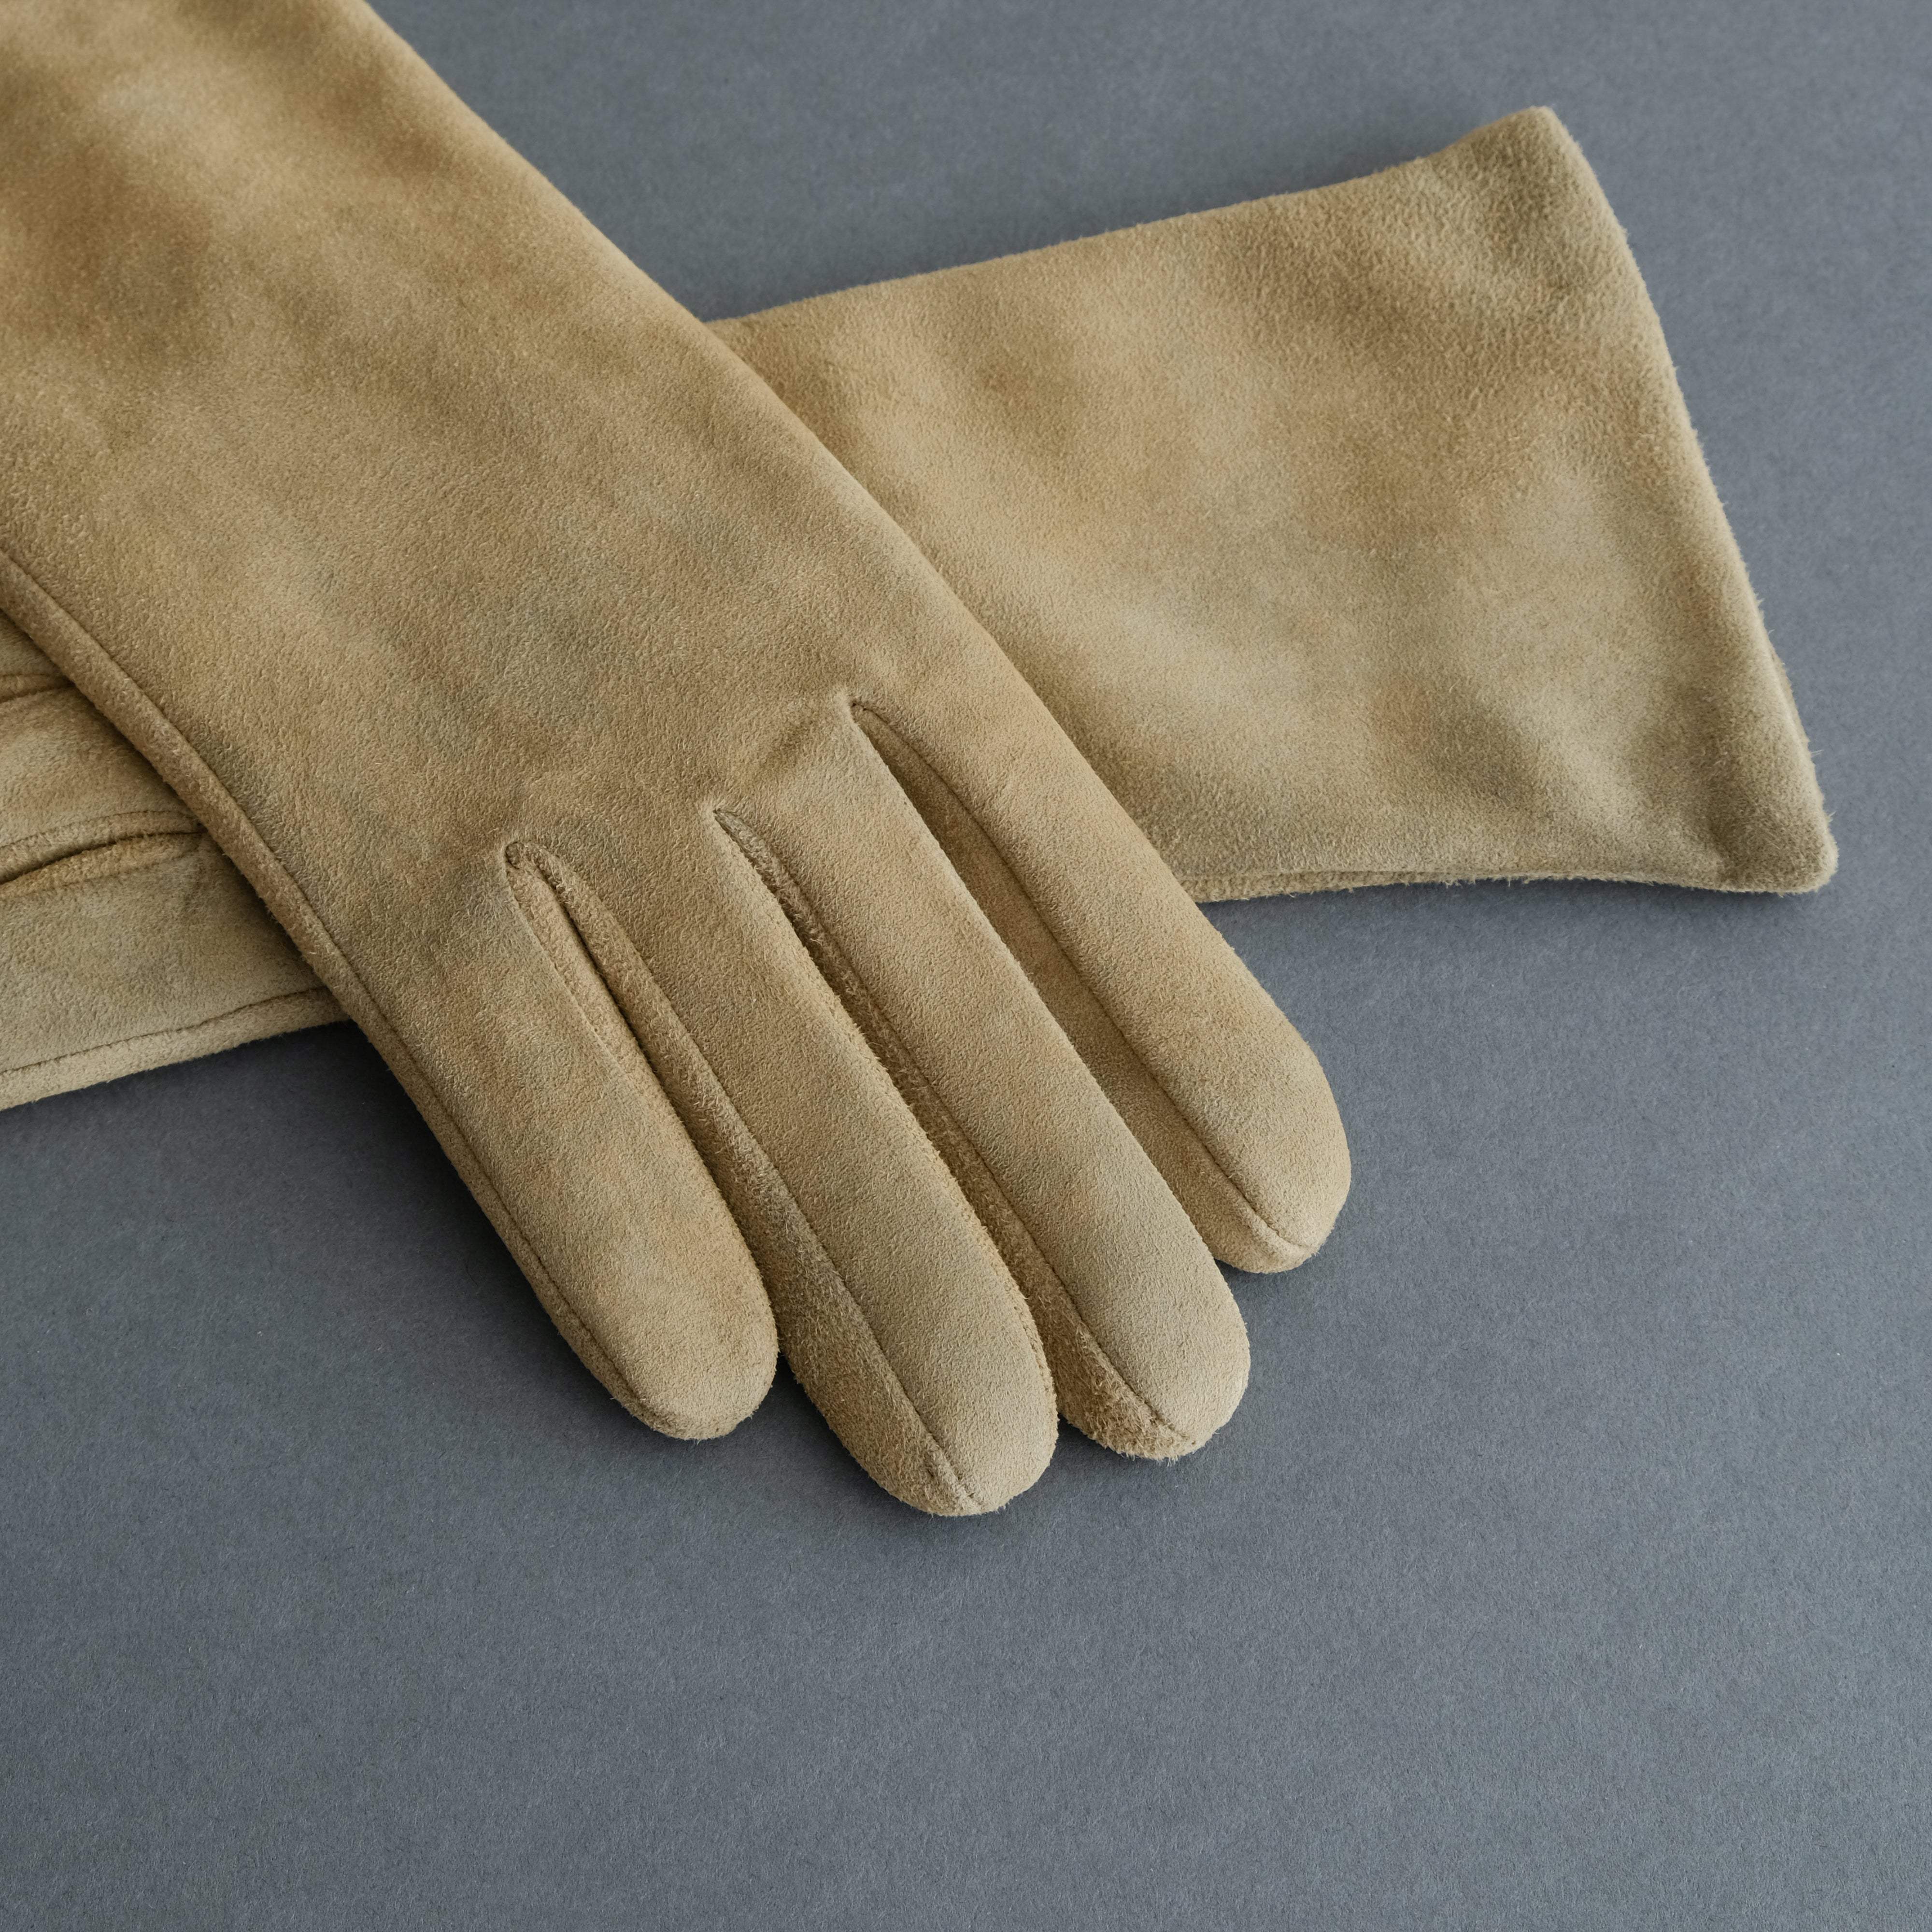 Ladies Gloves from Beige Goatskin Lined with Cashmere - TR Handschuhe Wien - Thomas Riemer Handmade Gloves